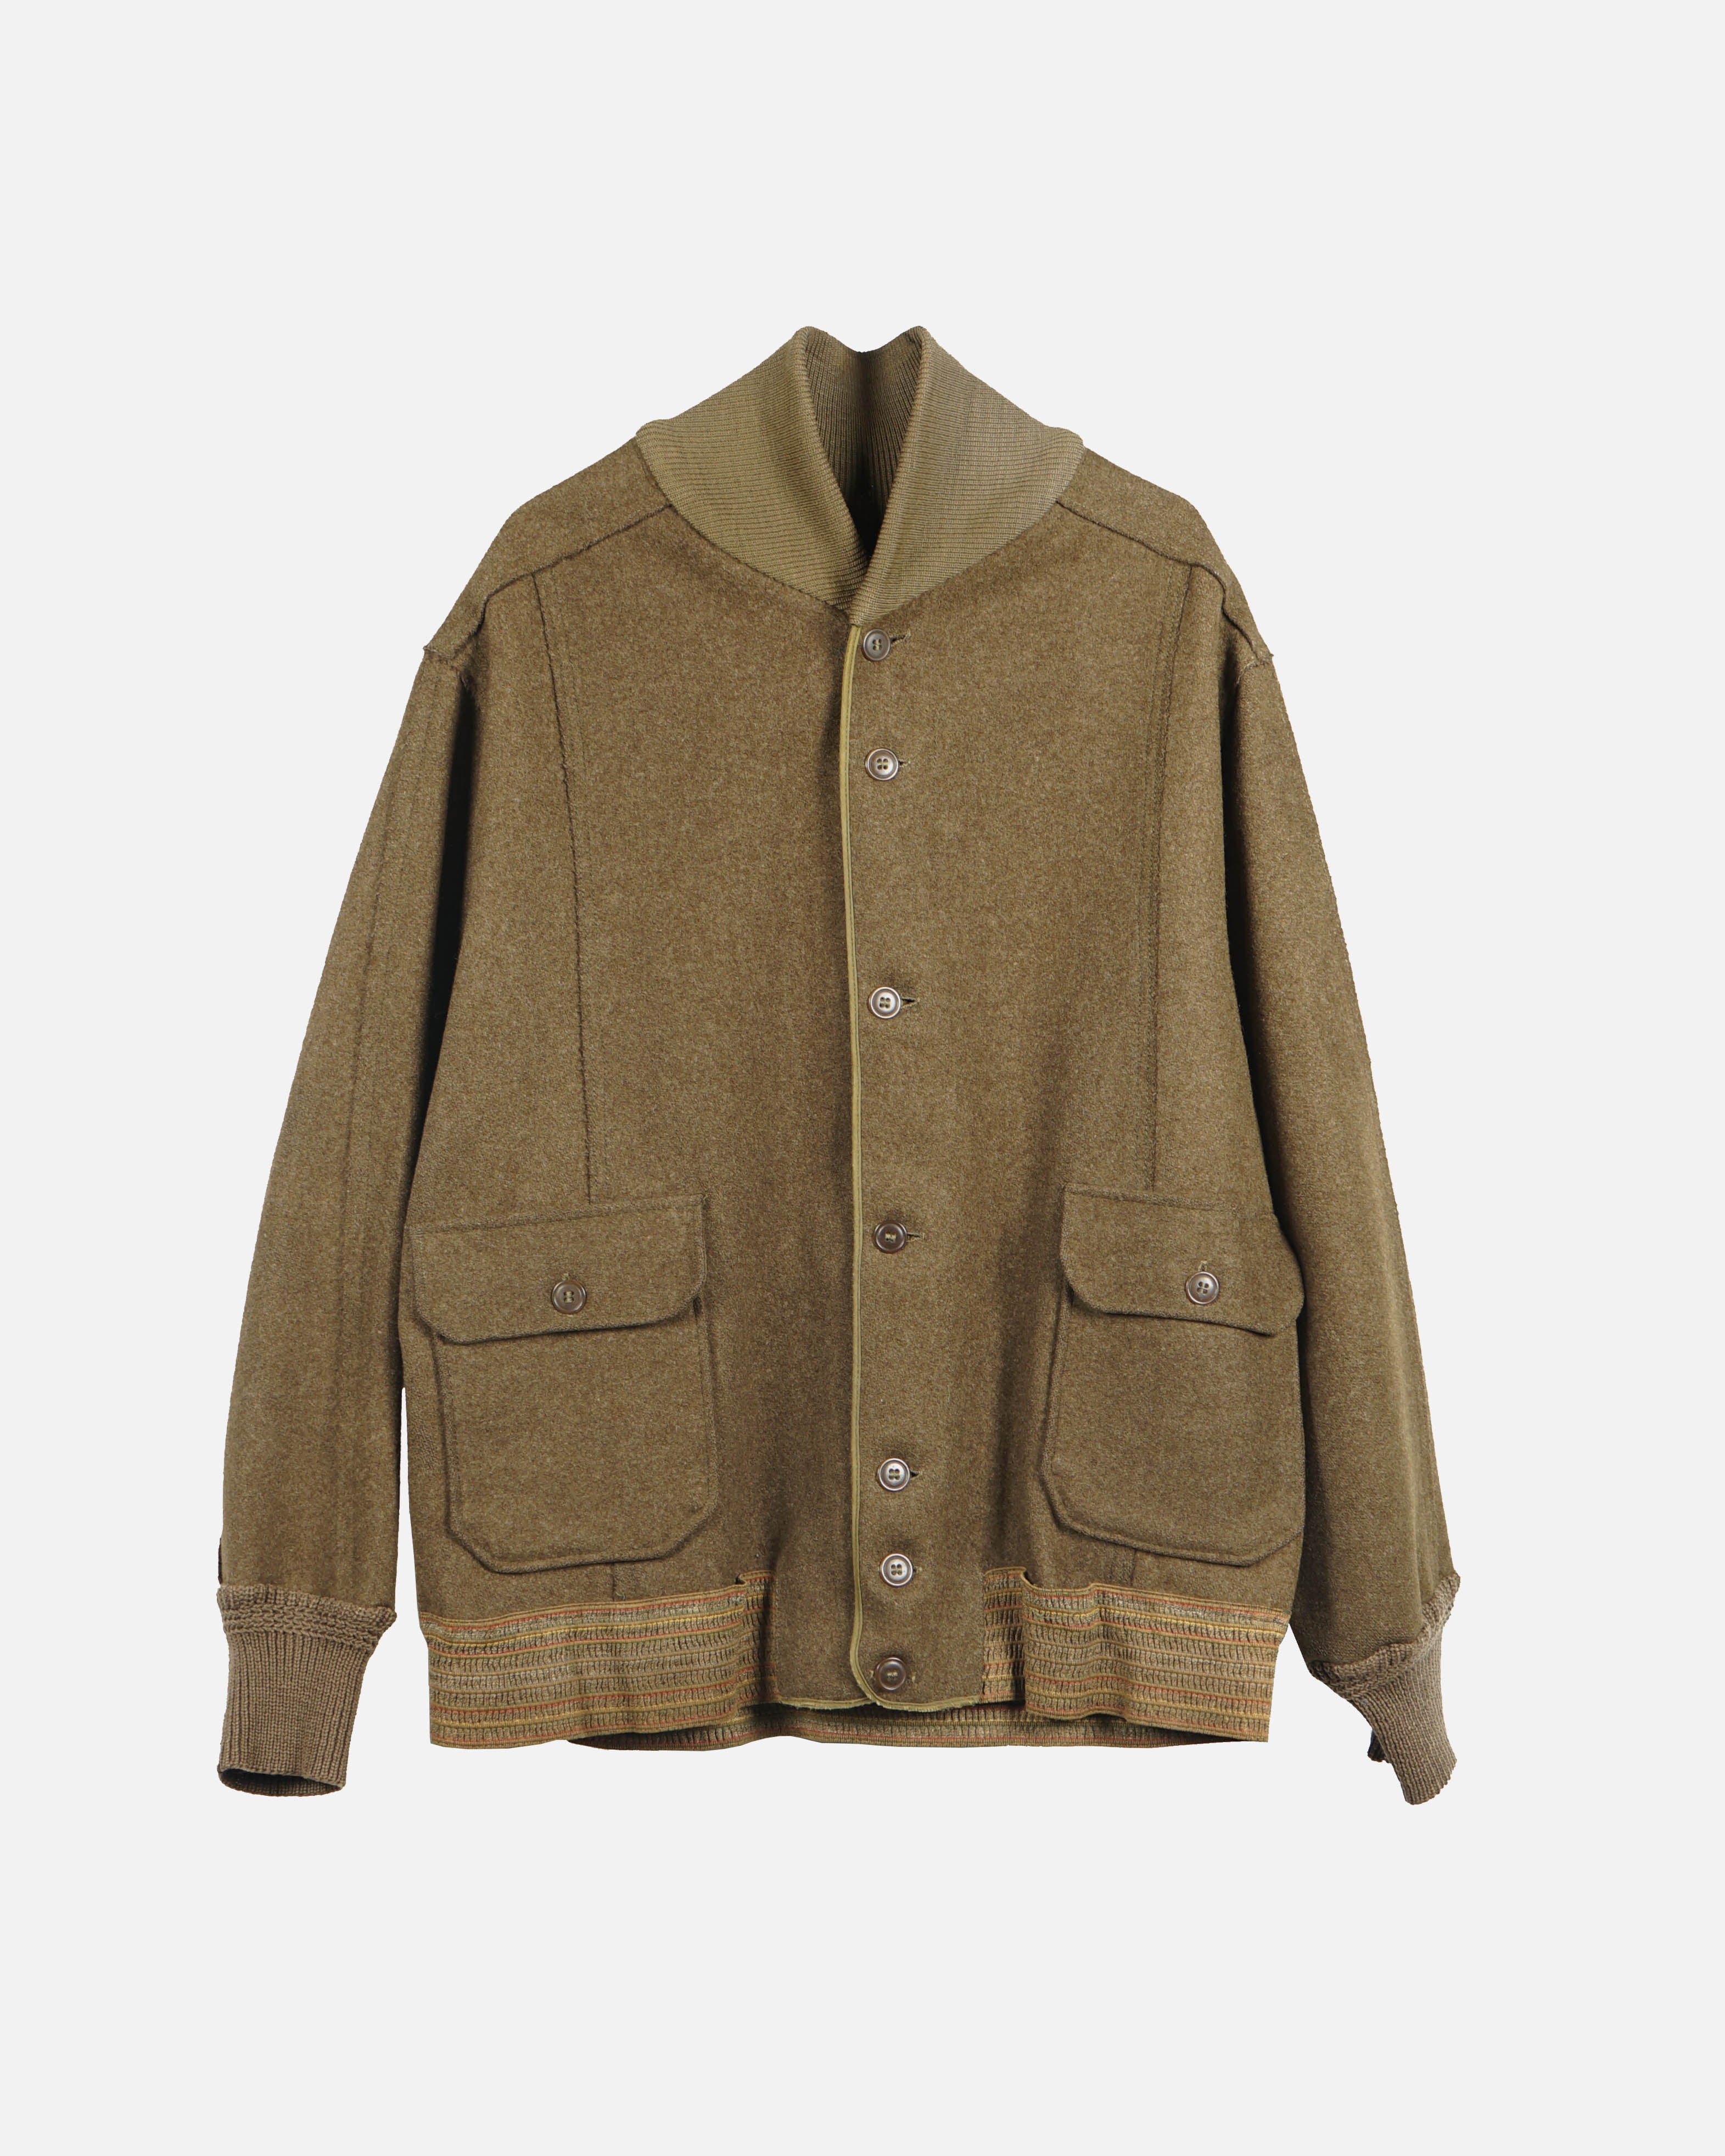 A-1 Wool Jacket